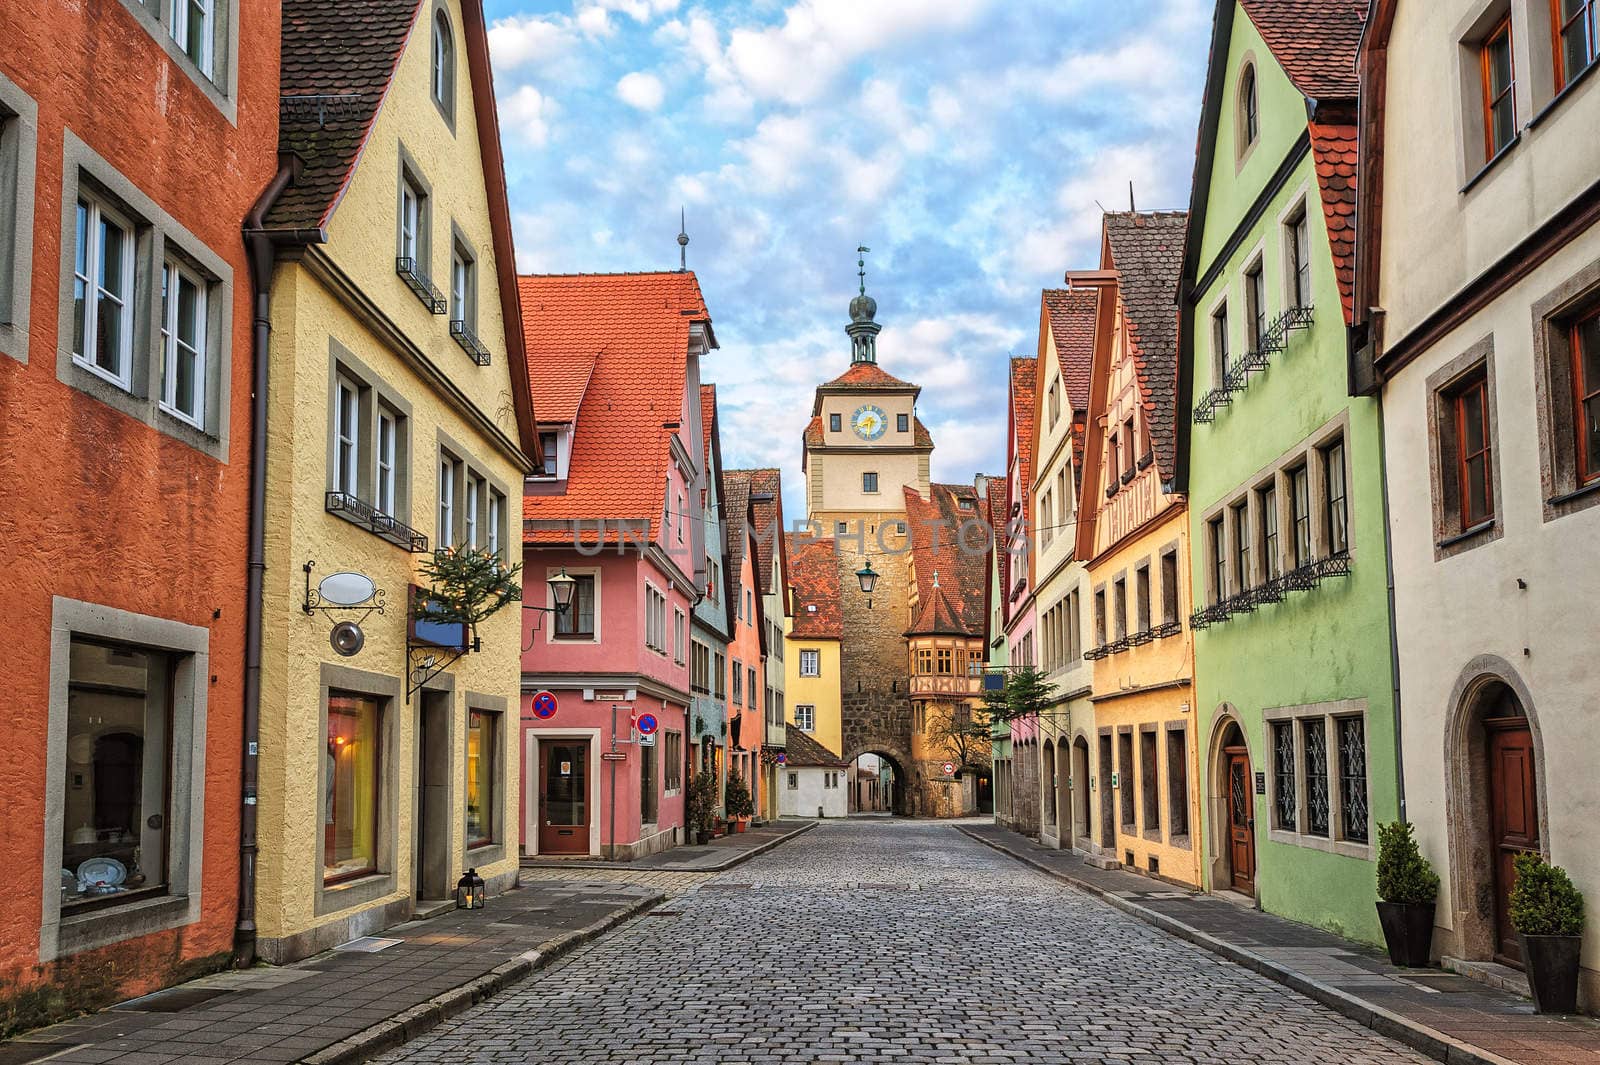 Rothenburg ob der Tauber, Germany by GlobePhotos